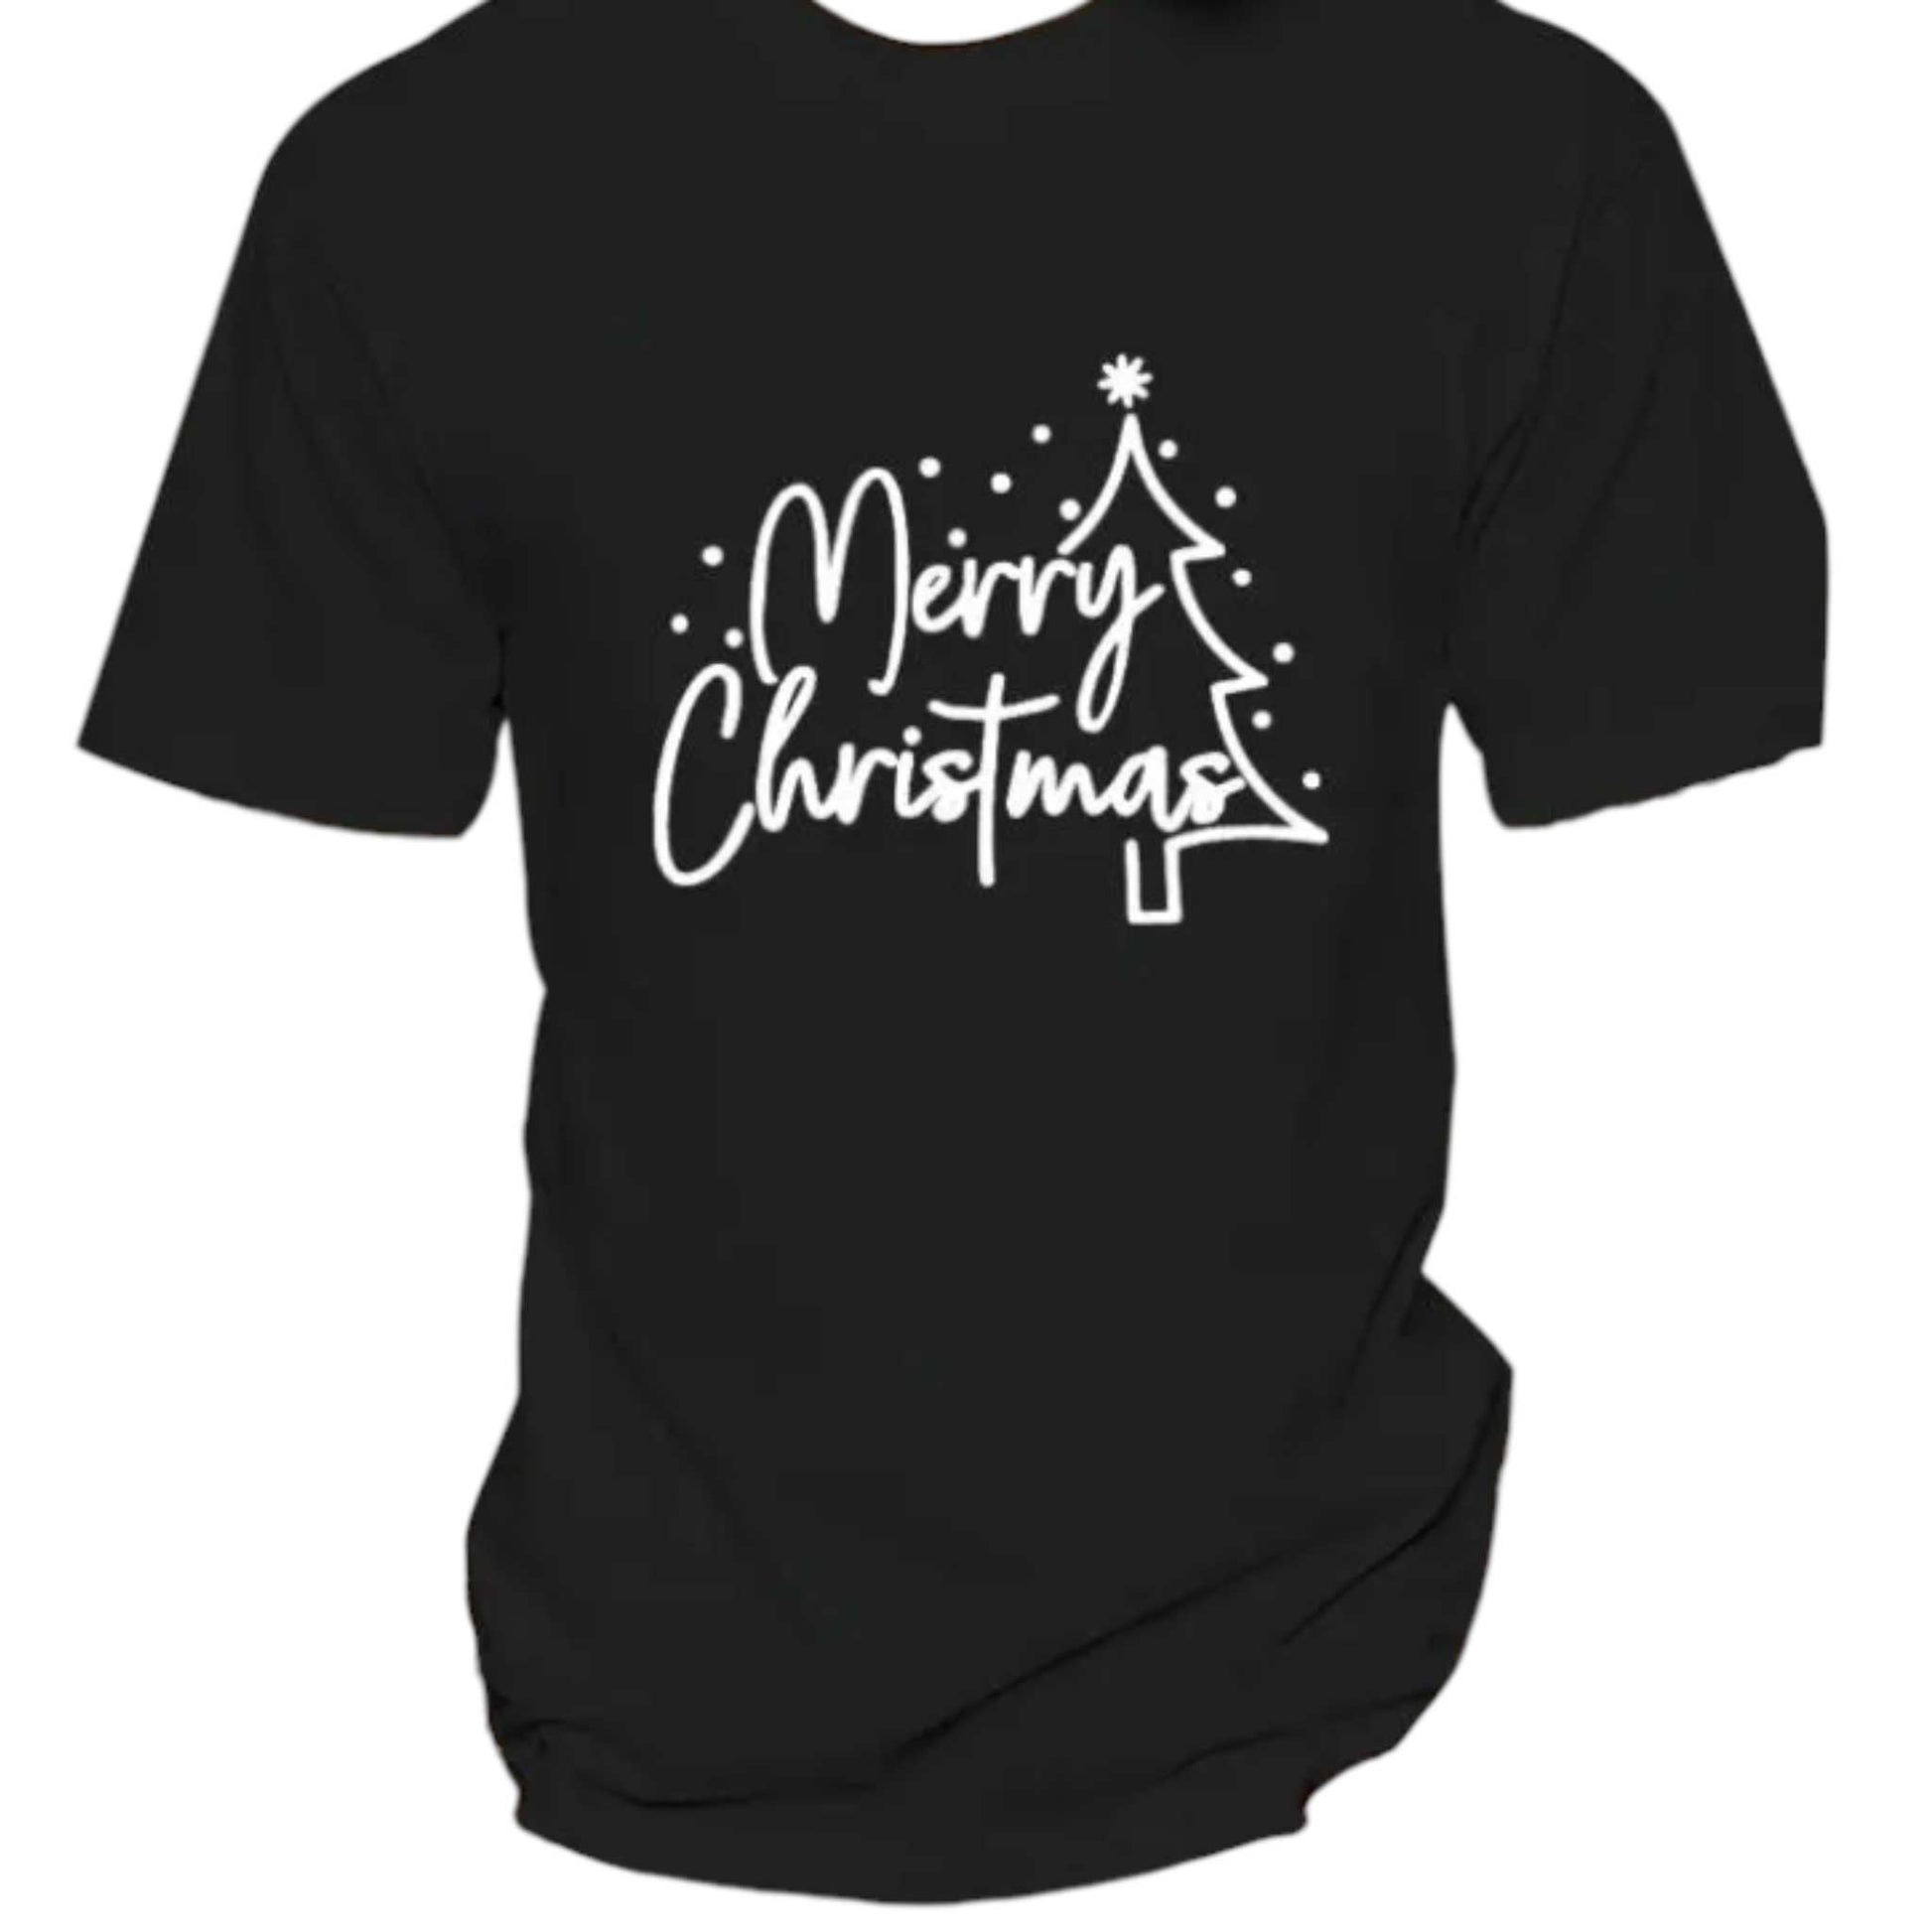 Tricou de Craciun negru, personalizat cu textul "Merry Christmas", 100% bumbac.